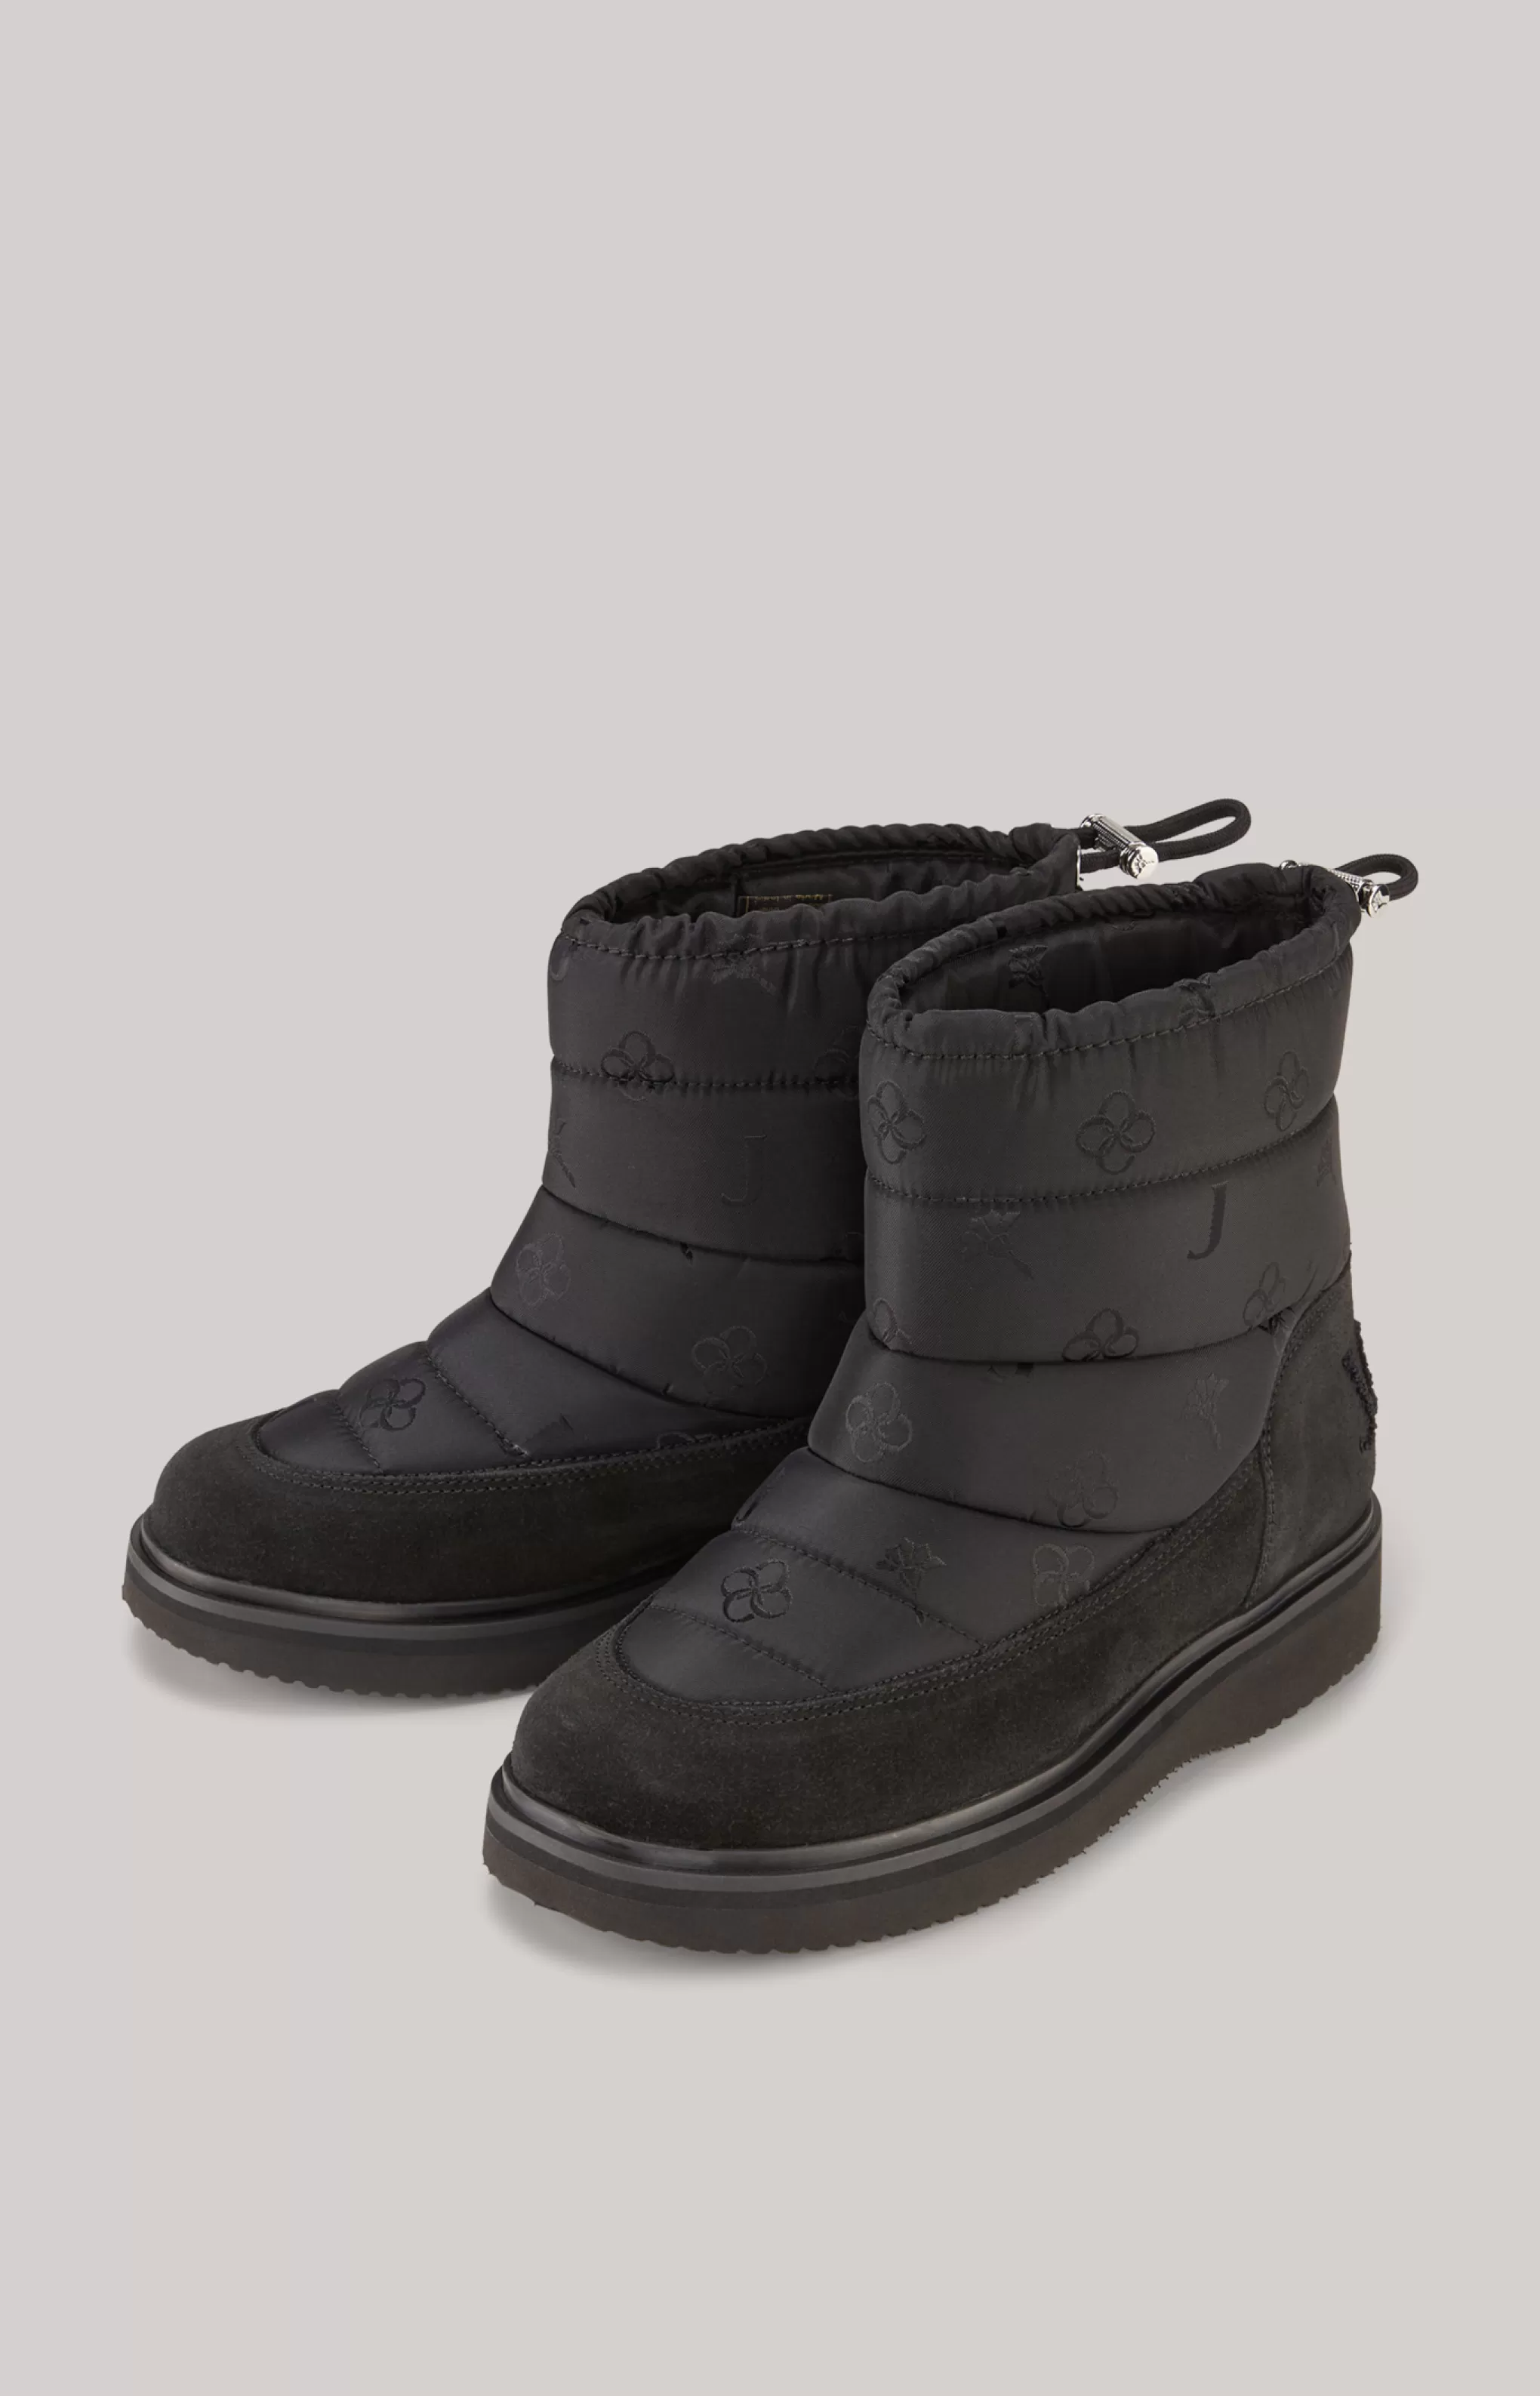 Shoes*JOOP Shoes Decoro Tessuto Telos Snow Boots in